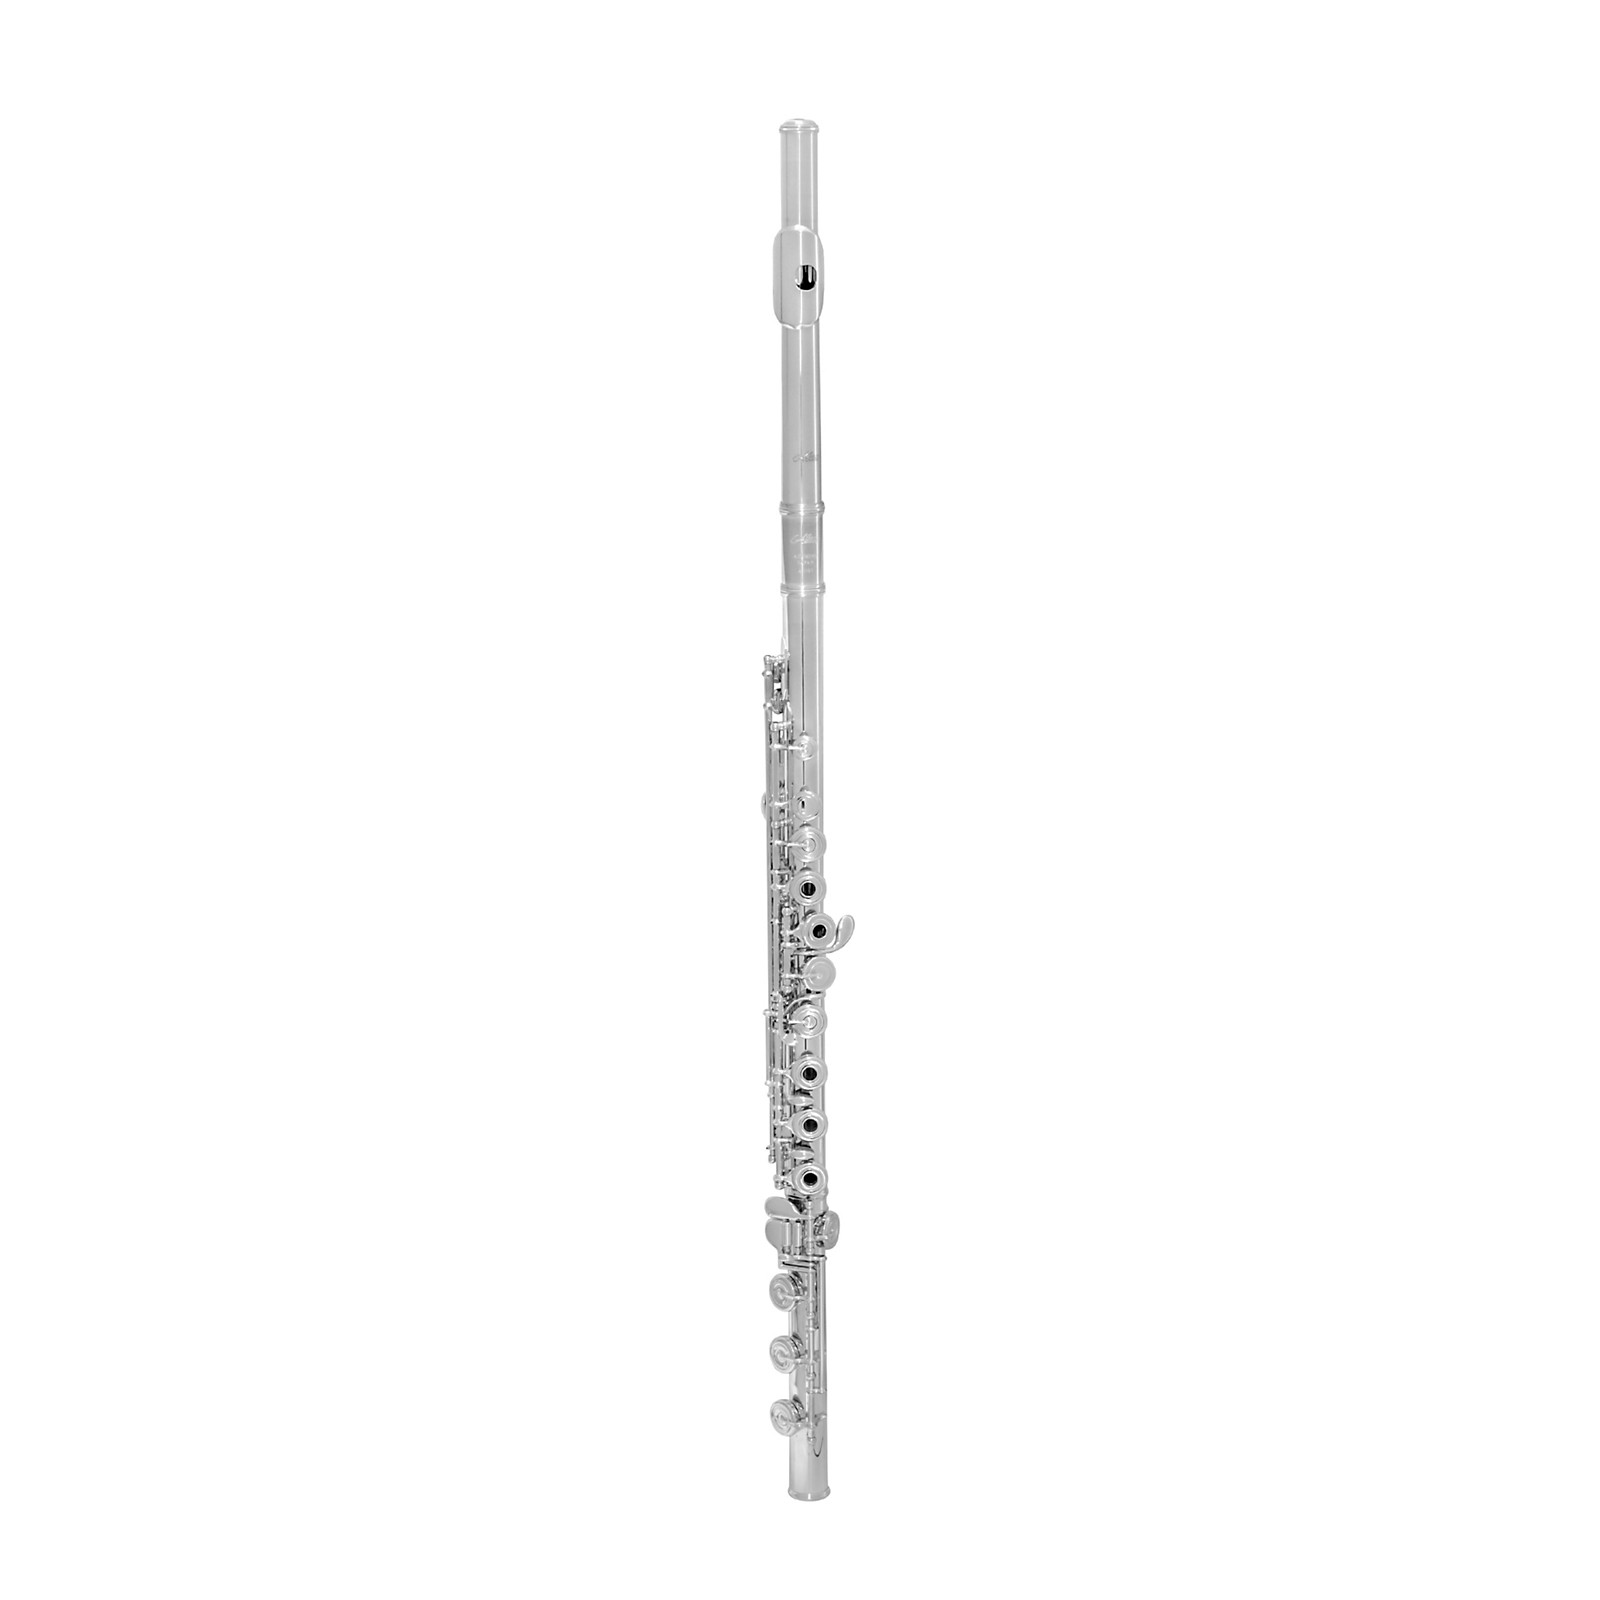 altus flute model numbers